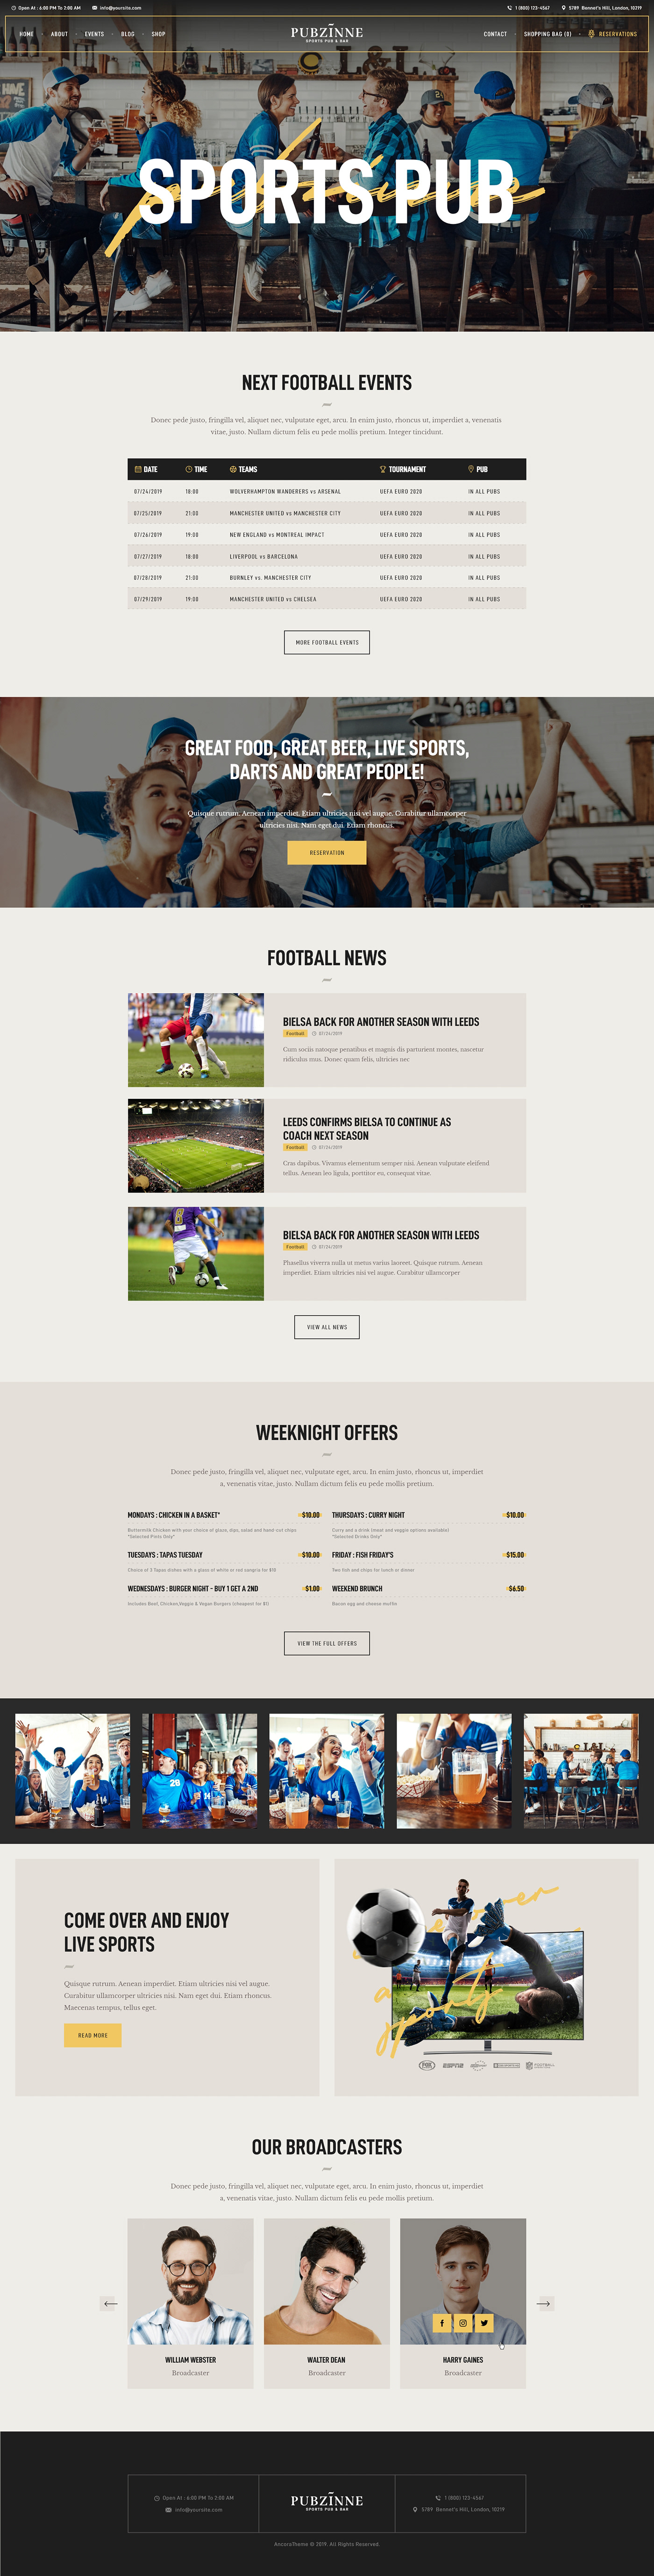 bar wordpress theme Sports Bar WordPress Theme